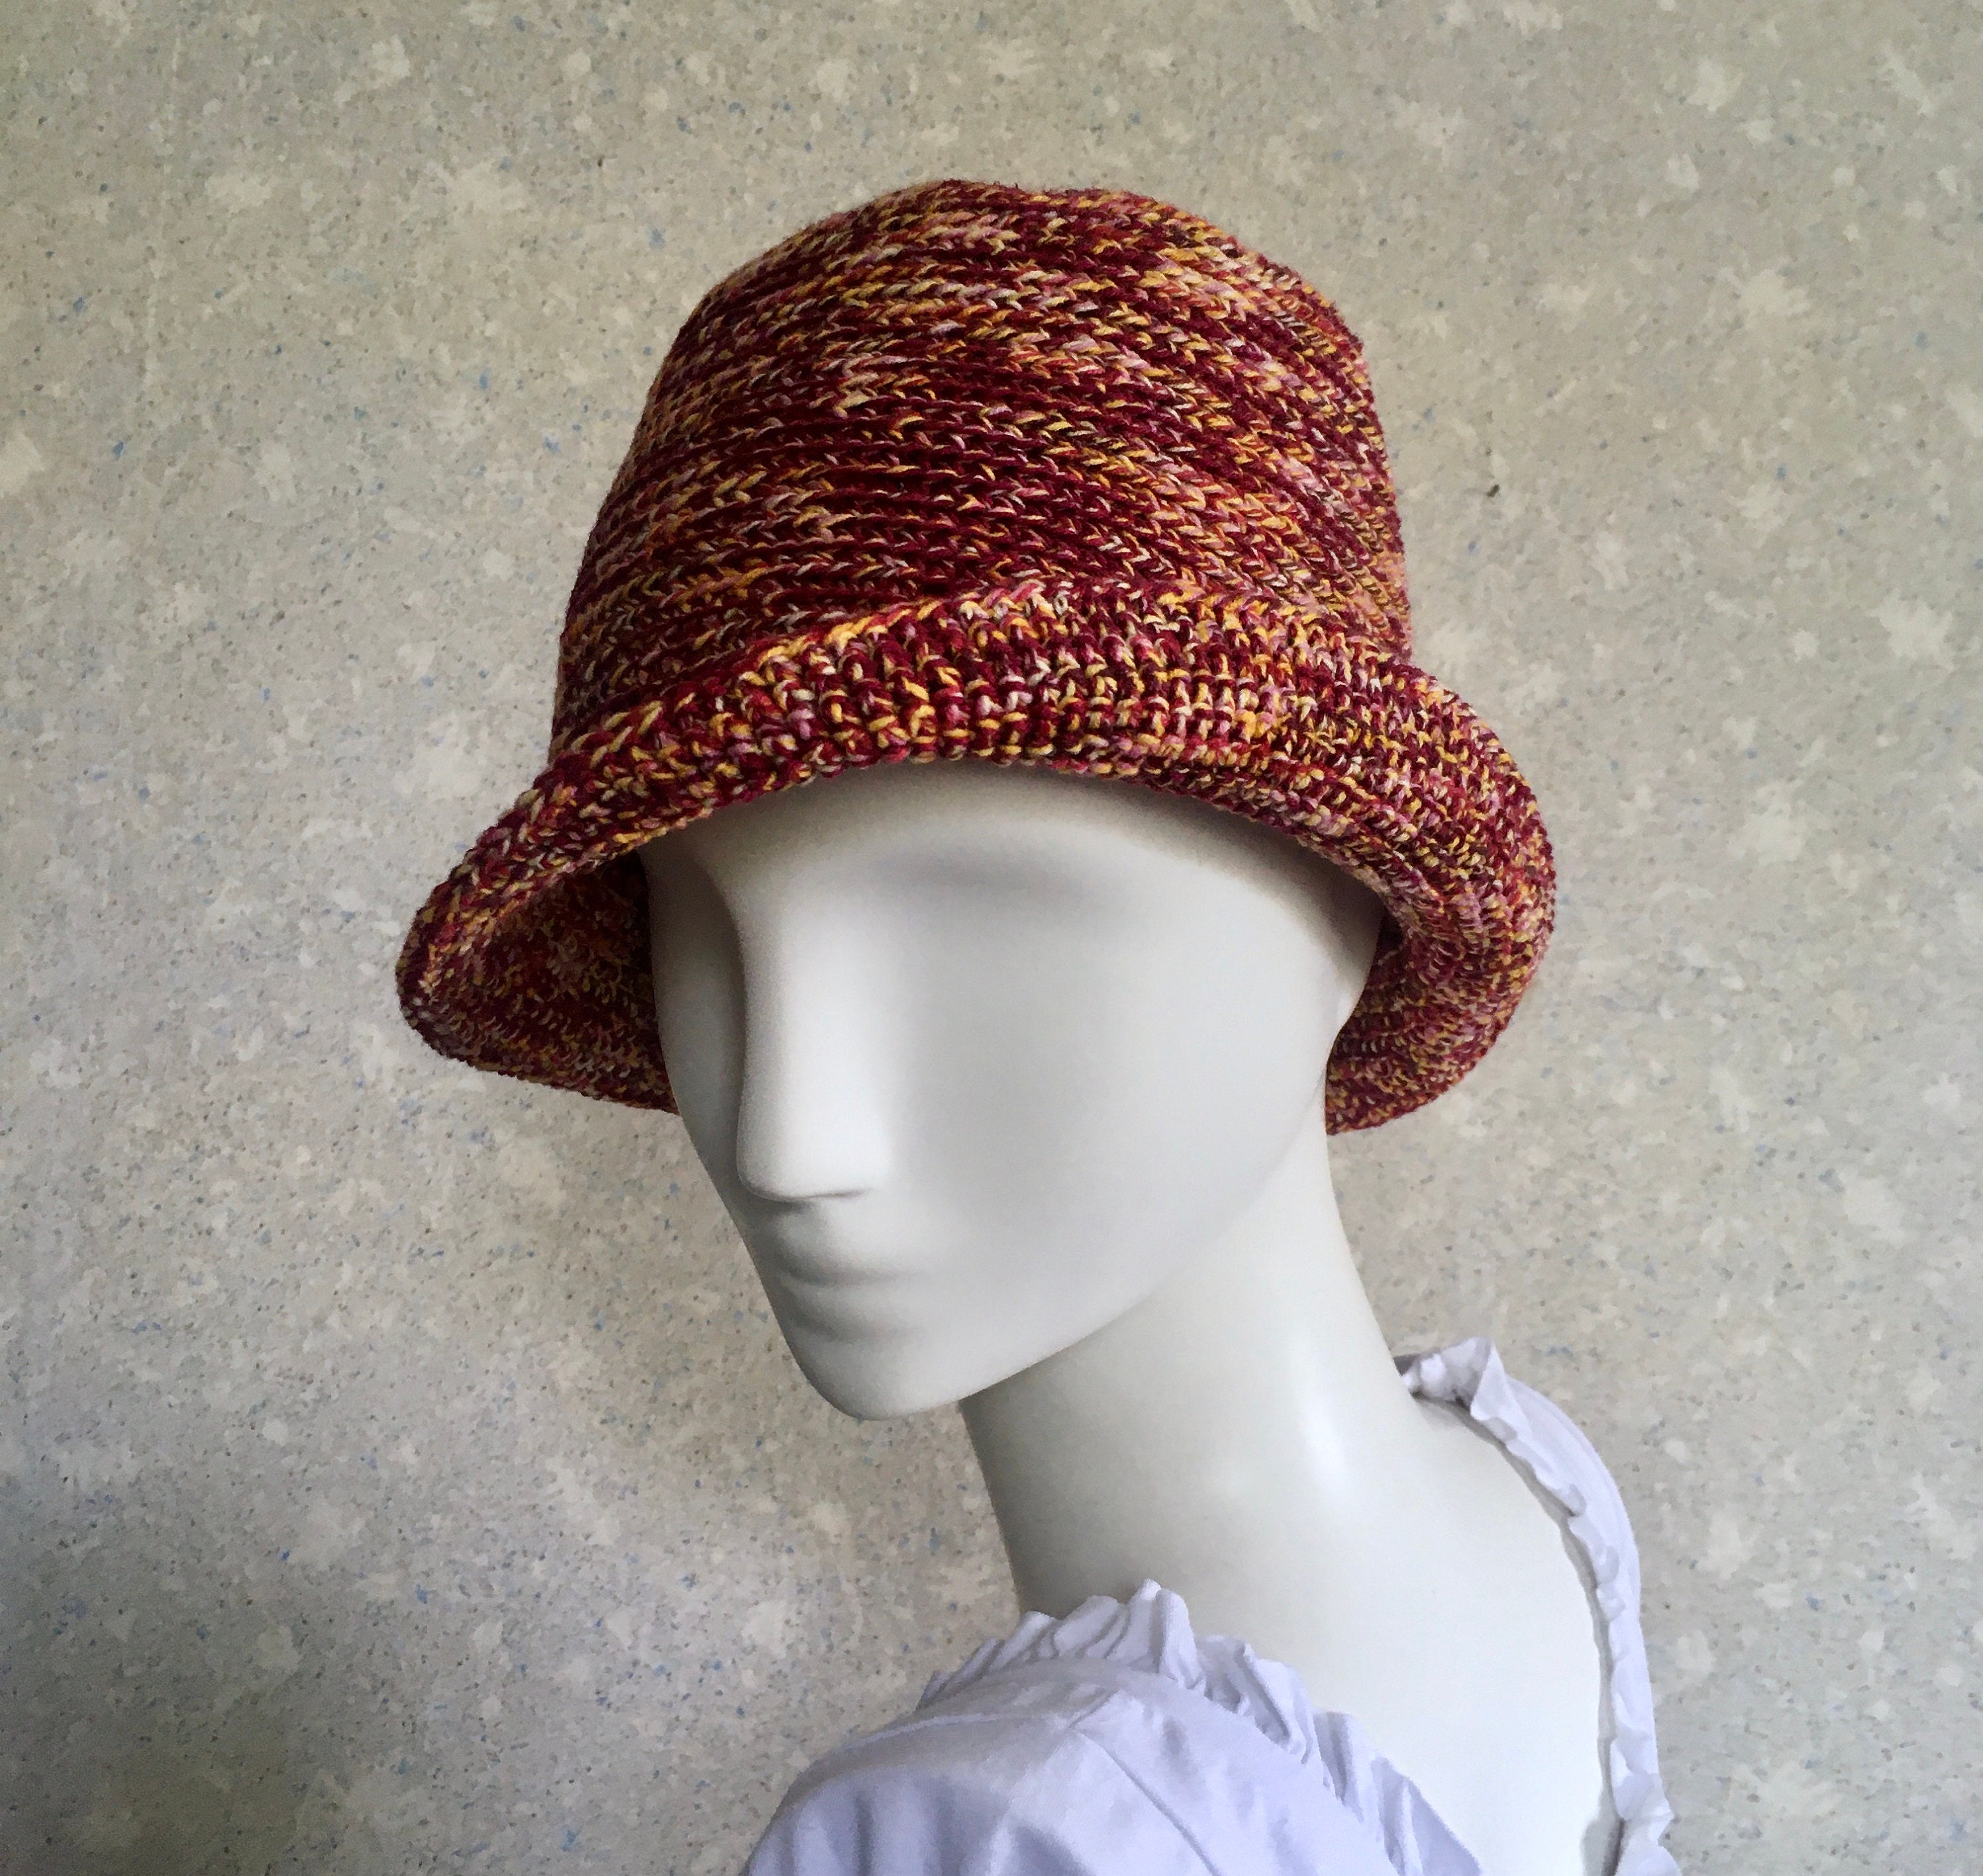 Crochet Panama hat made of colorful yarn | Etsy